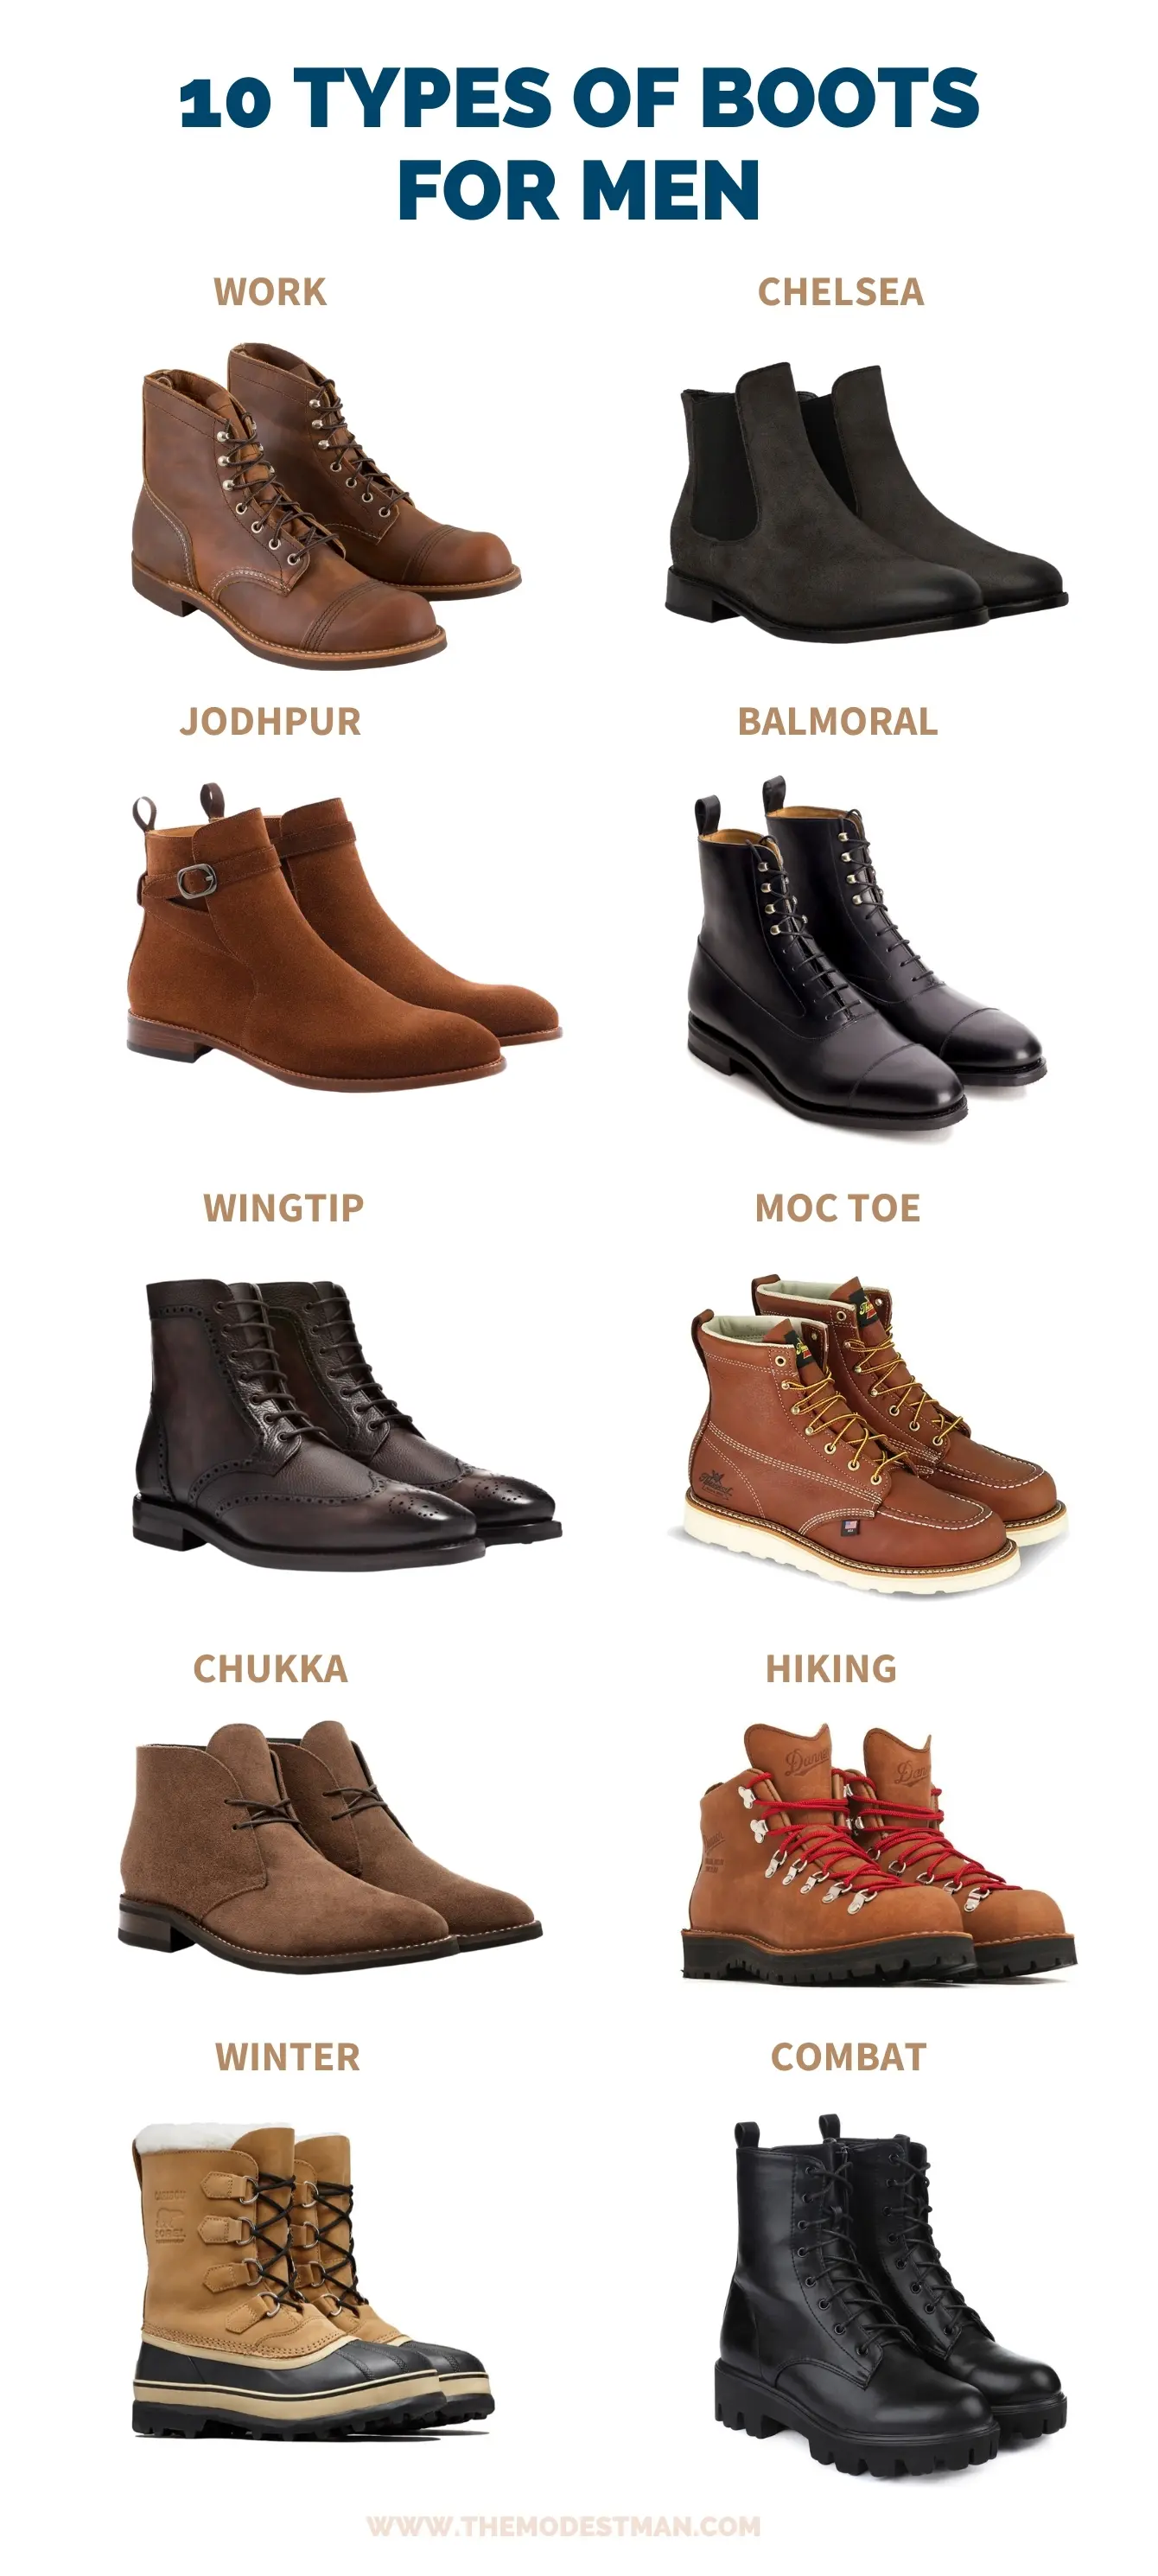 Premium Waterproof Boots | The Original Muck Boot Company™